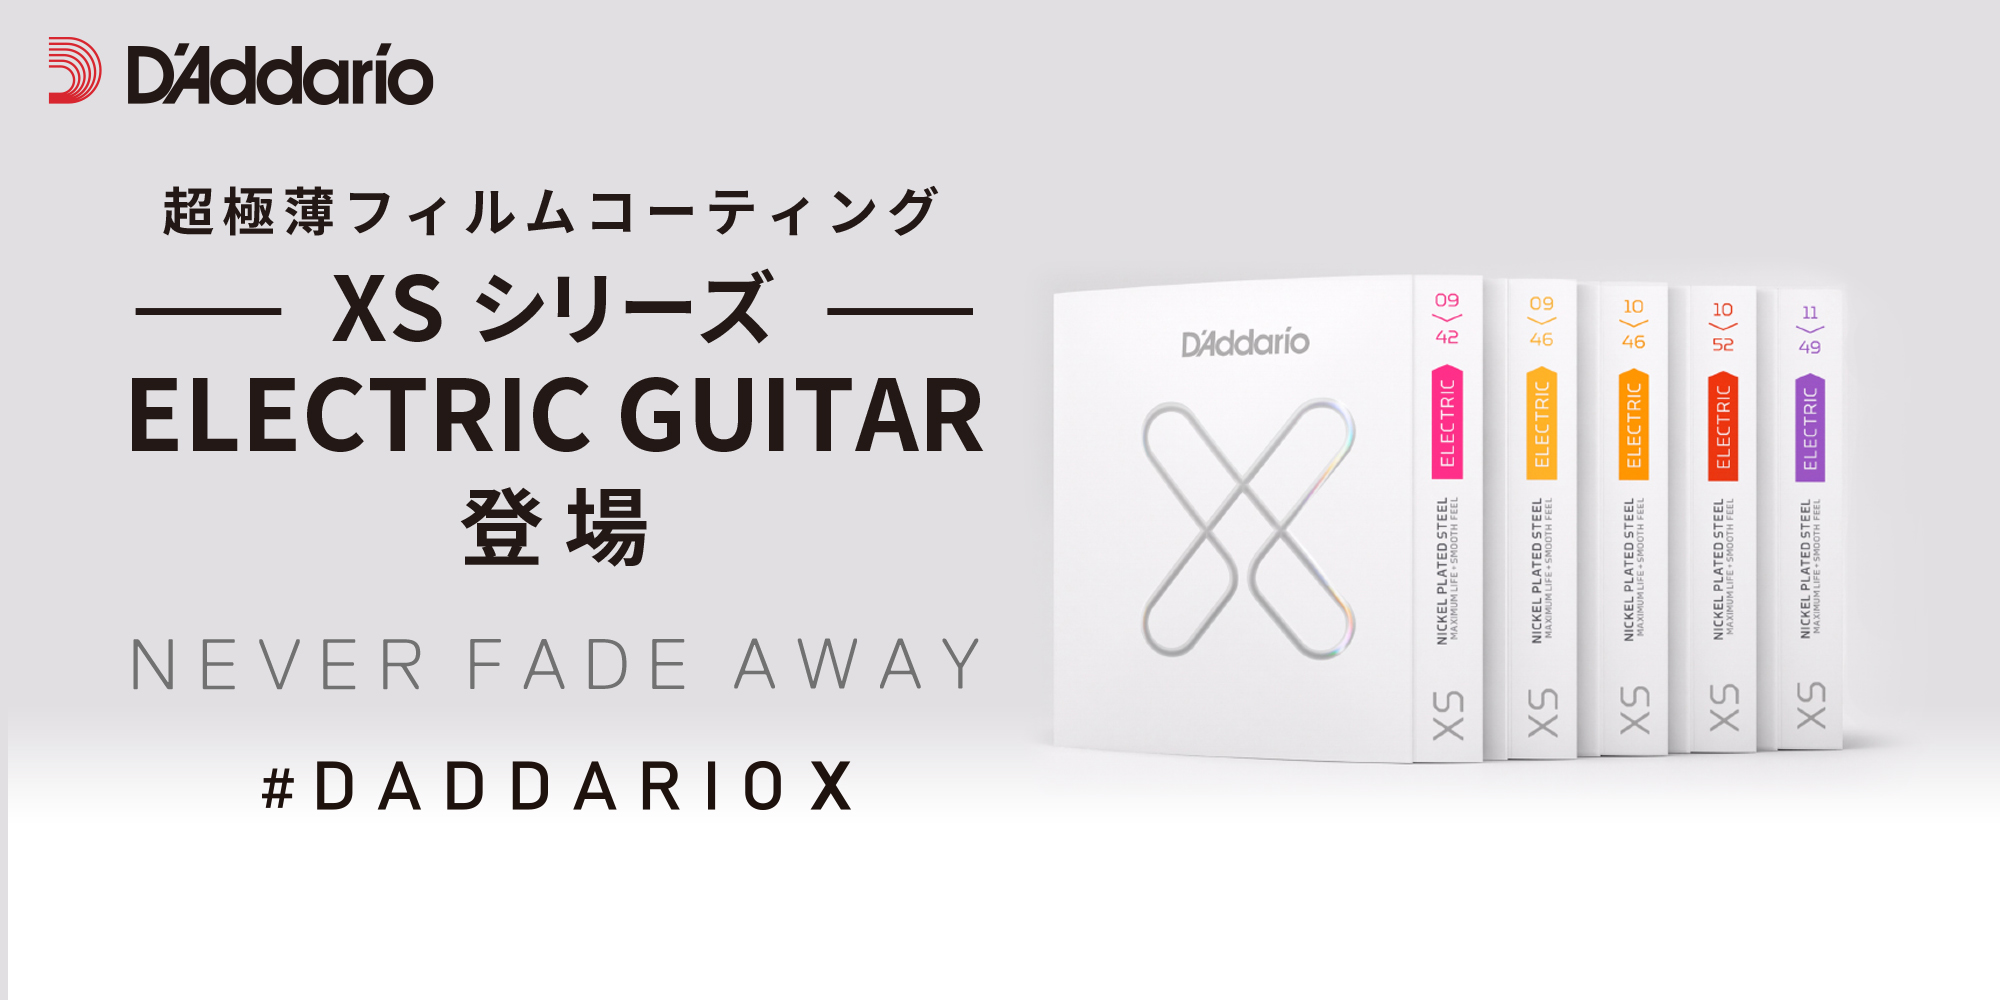 D’Addario 最新フィルムコーティング弦、『 XS 』シリーズのエレキギター用弦がいよいよ日本国内新発売です。